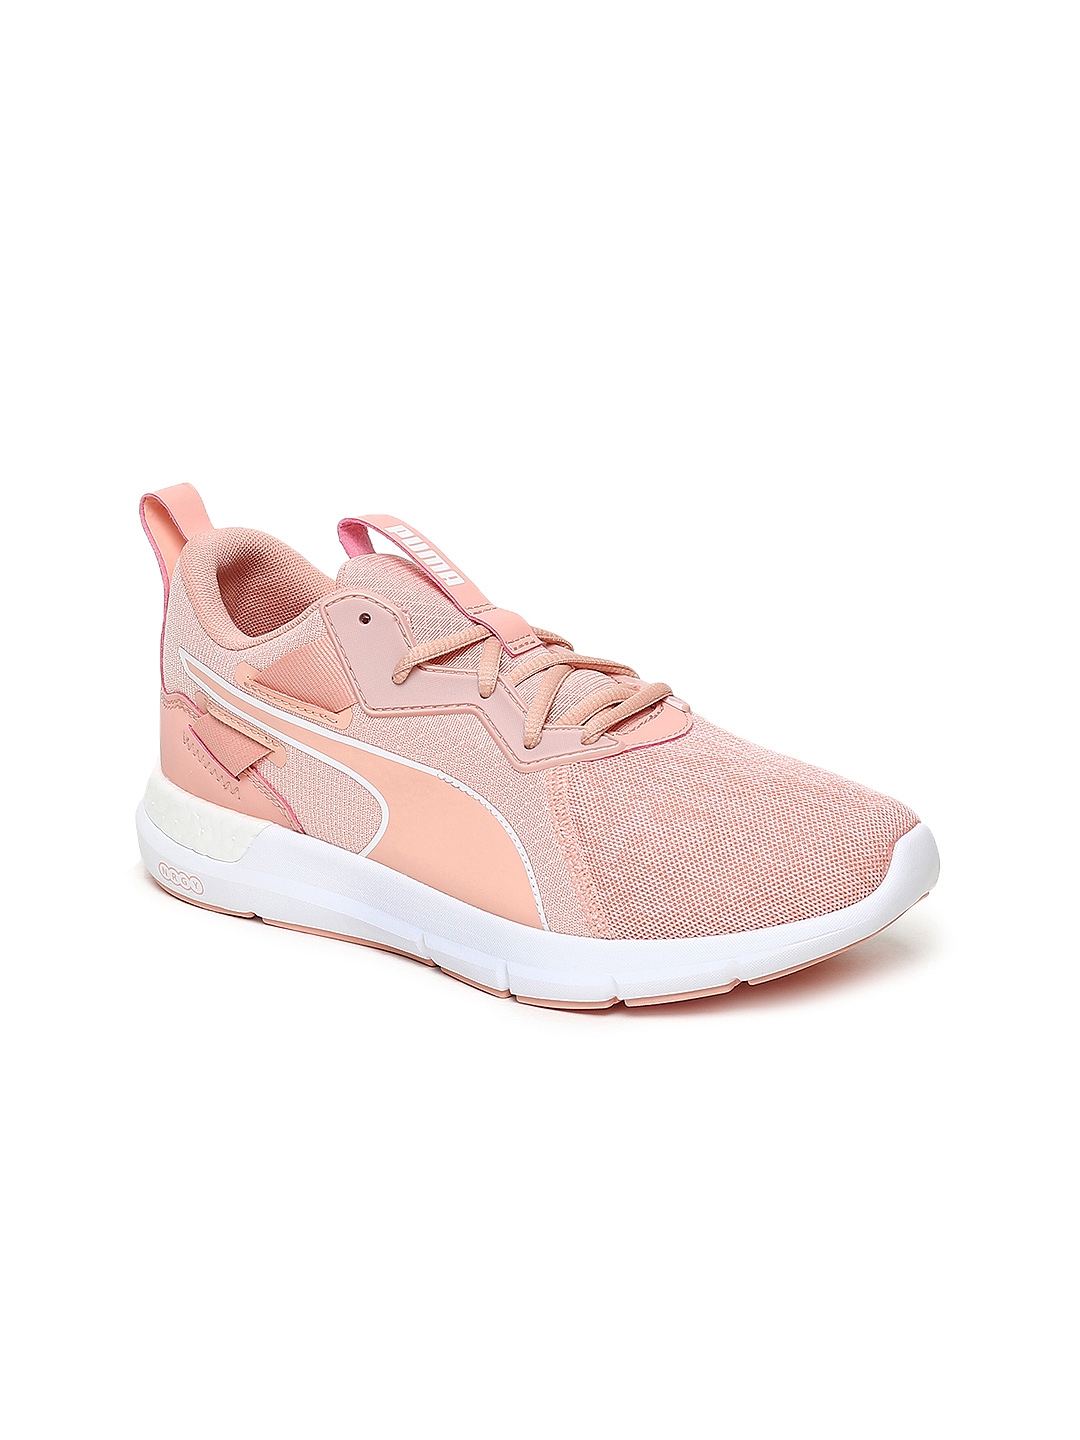 puma shoes for women peach